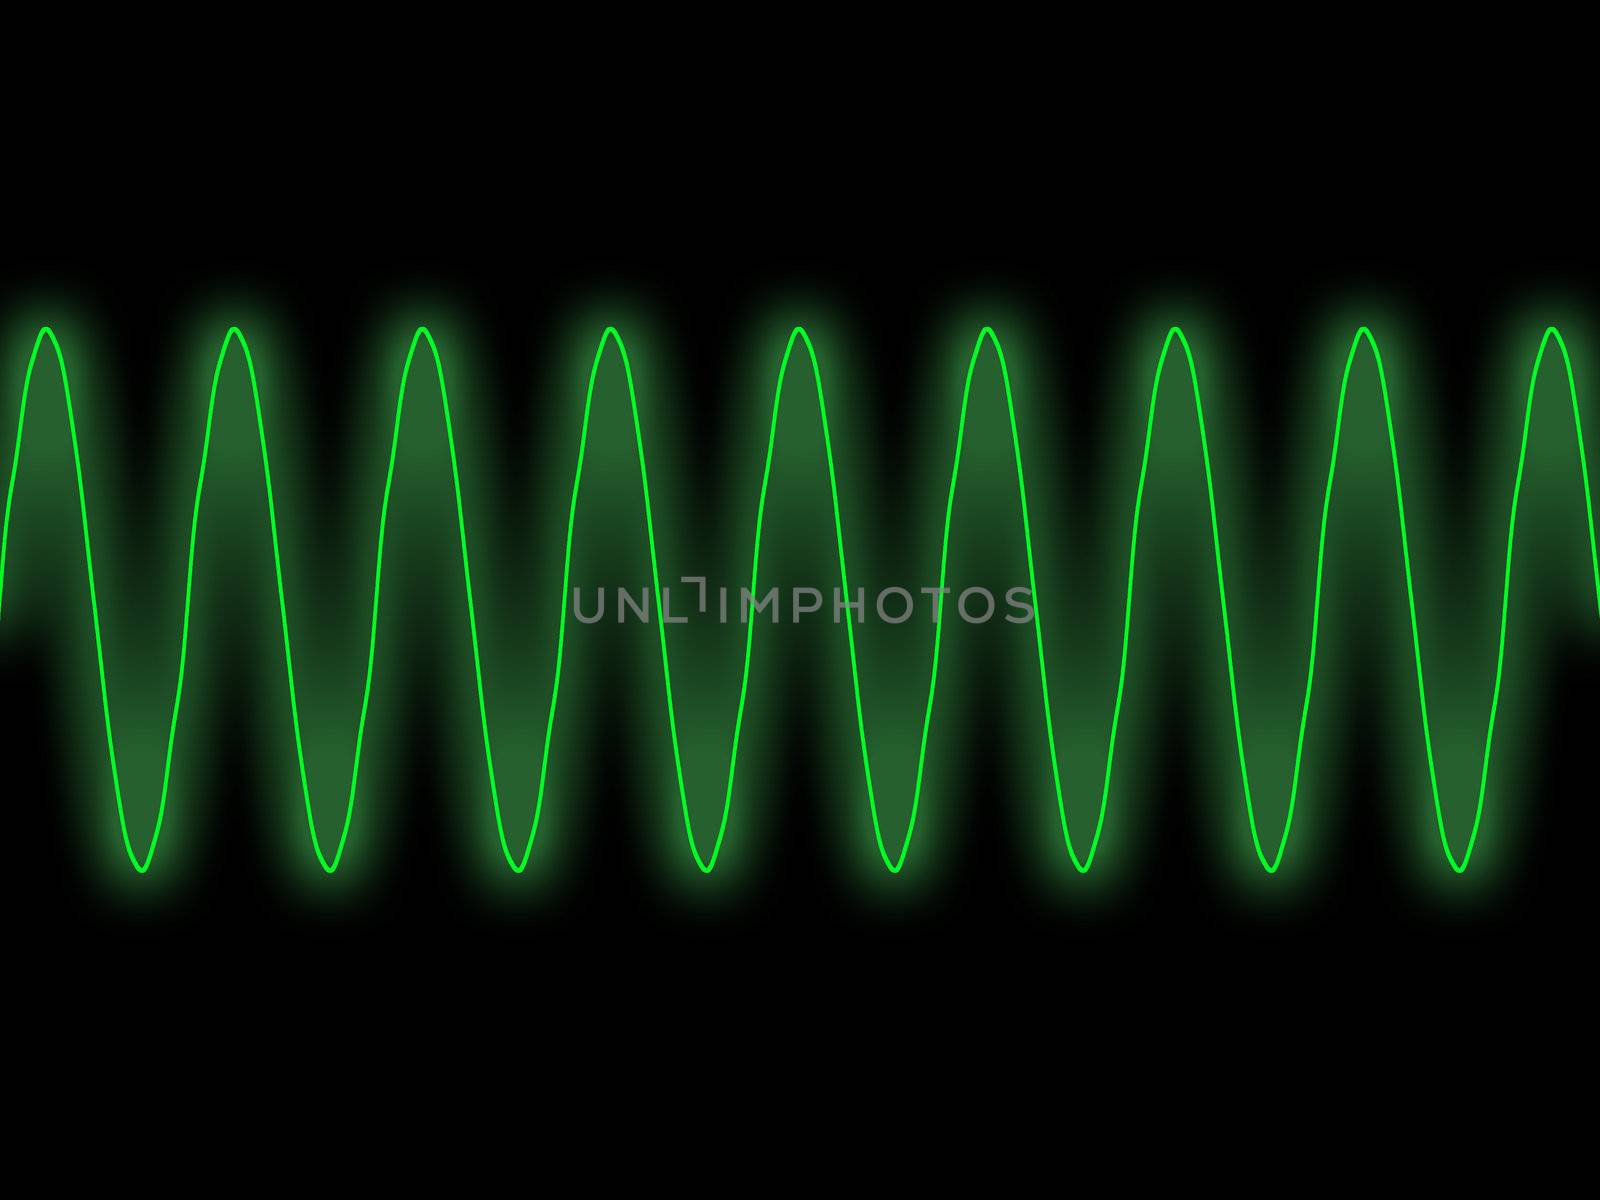 Straightforward illustration of green sine wave with glow effect against darl background copyspace